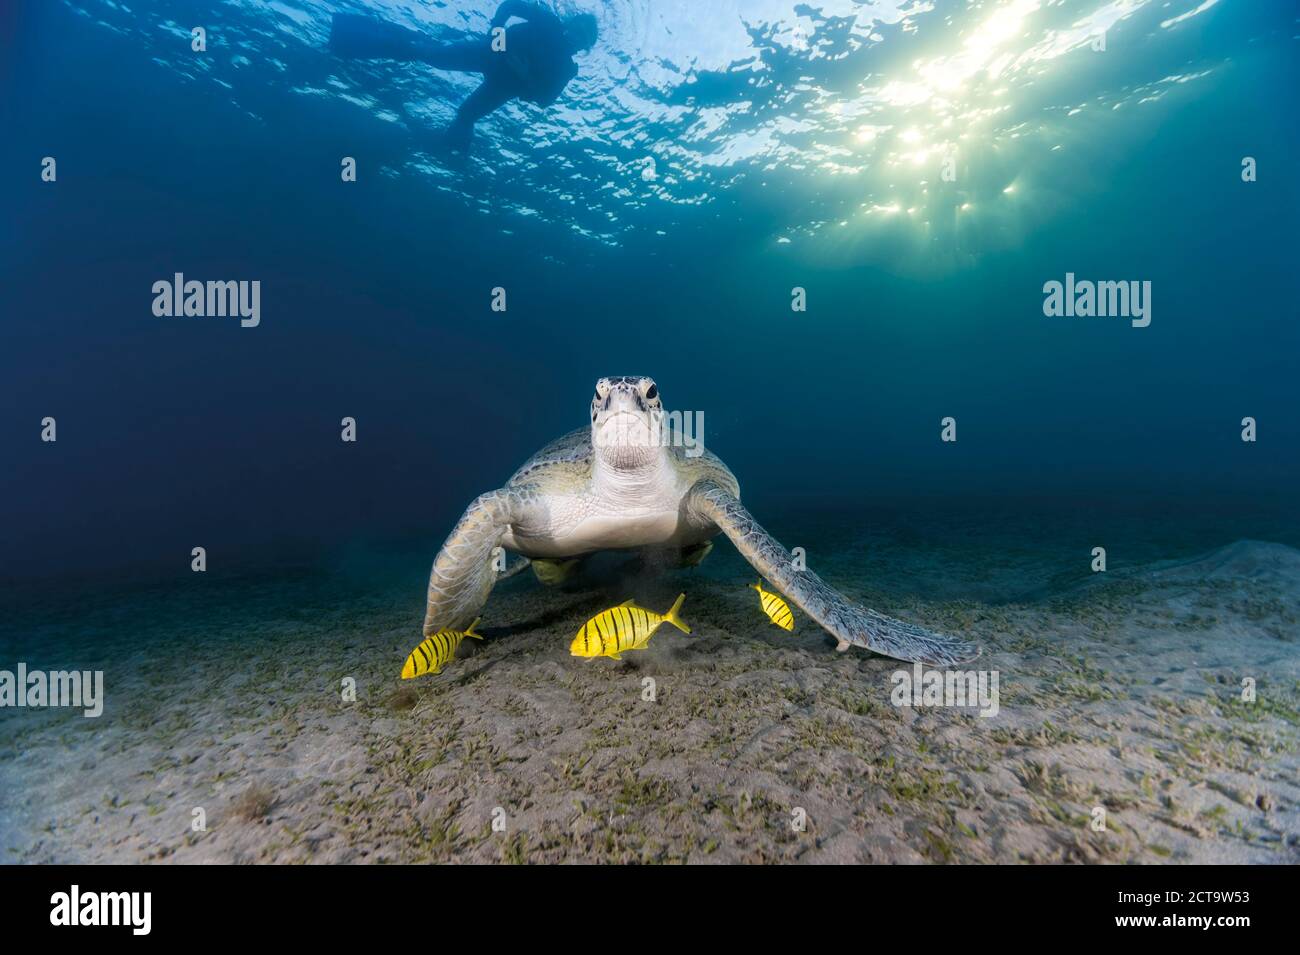 Egypt, Red Sea, Green sea turtle (Chelonia mydas) eating seaweed Stock Photo